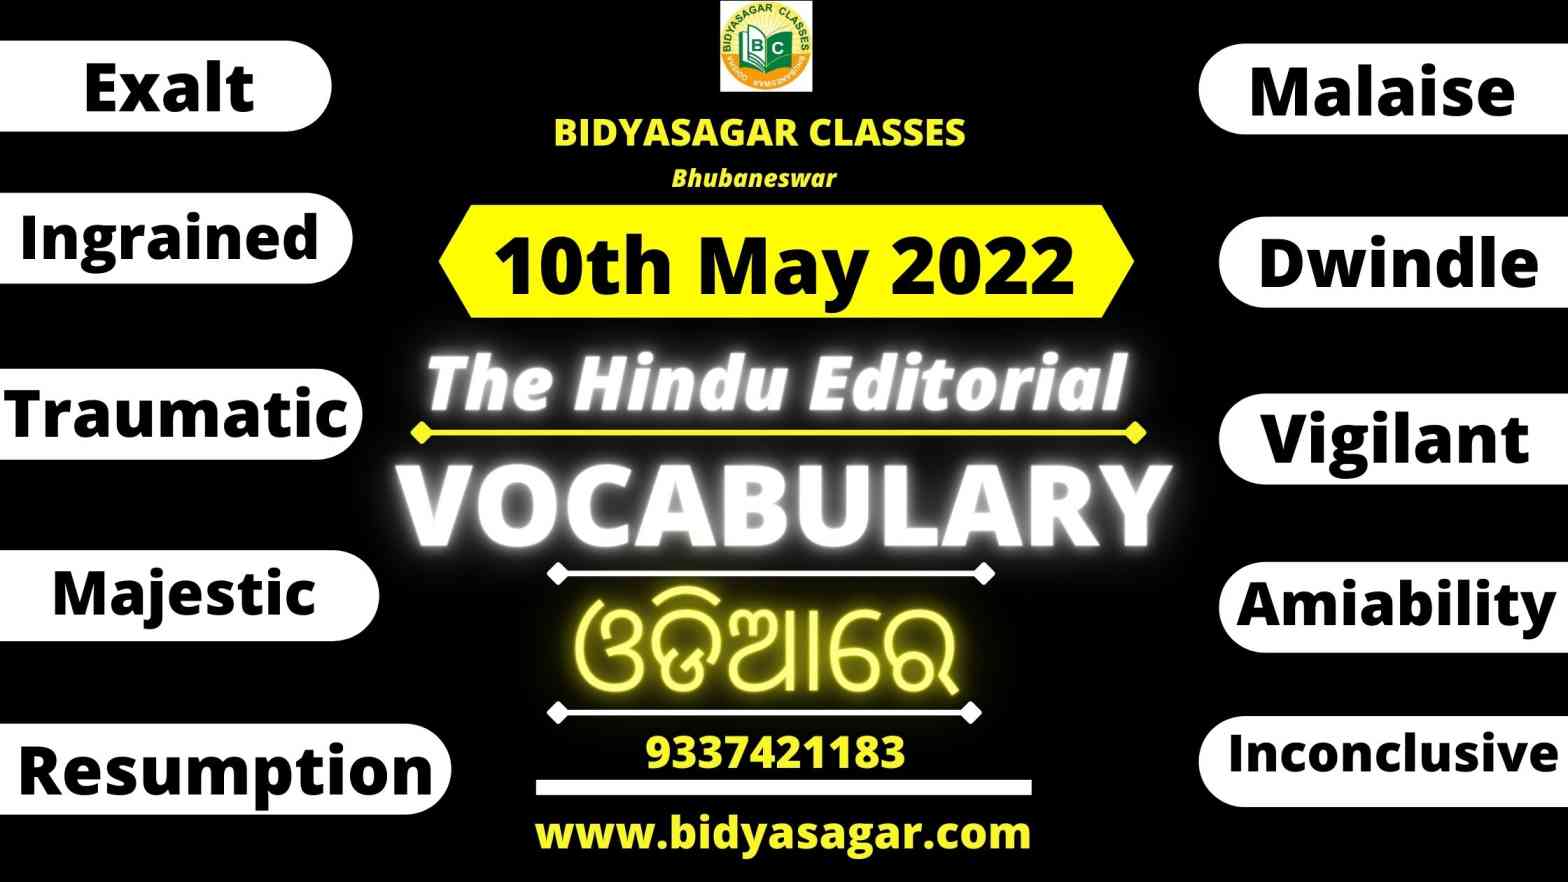 The Hindu Editorial Vocabulary of 10th May 2022